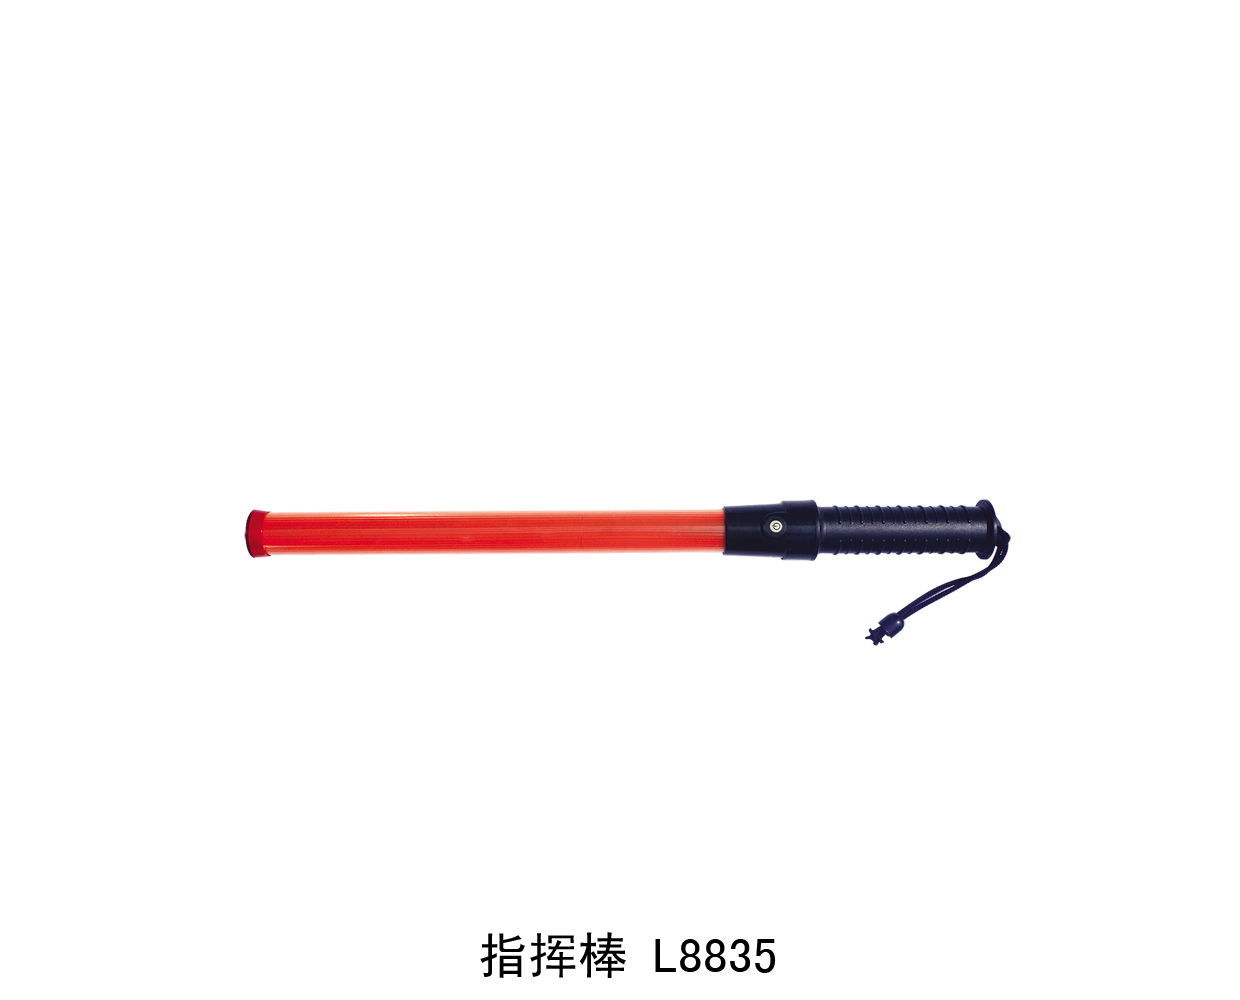 L8835 Flashing Baton 